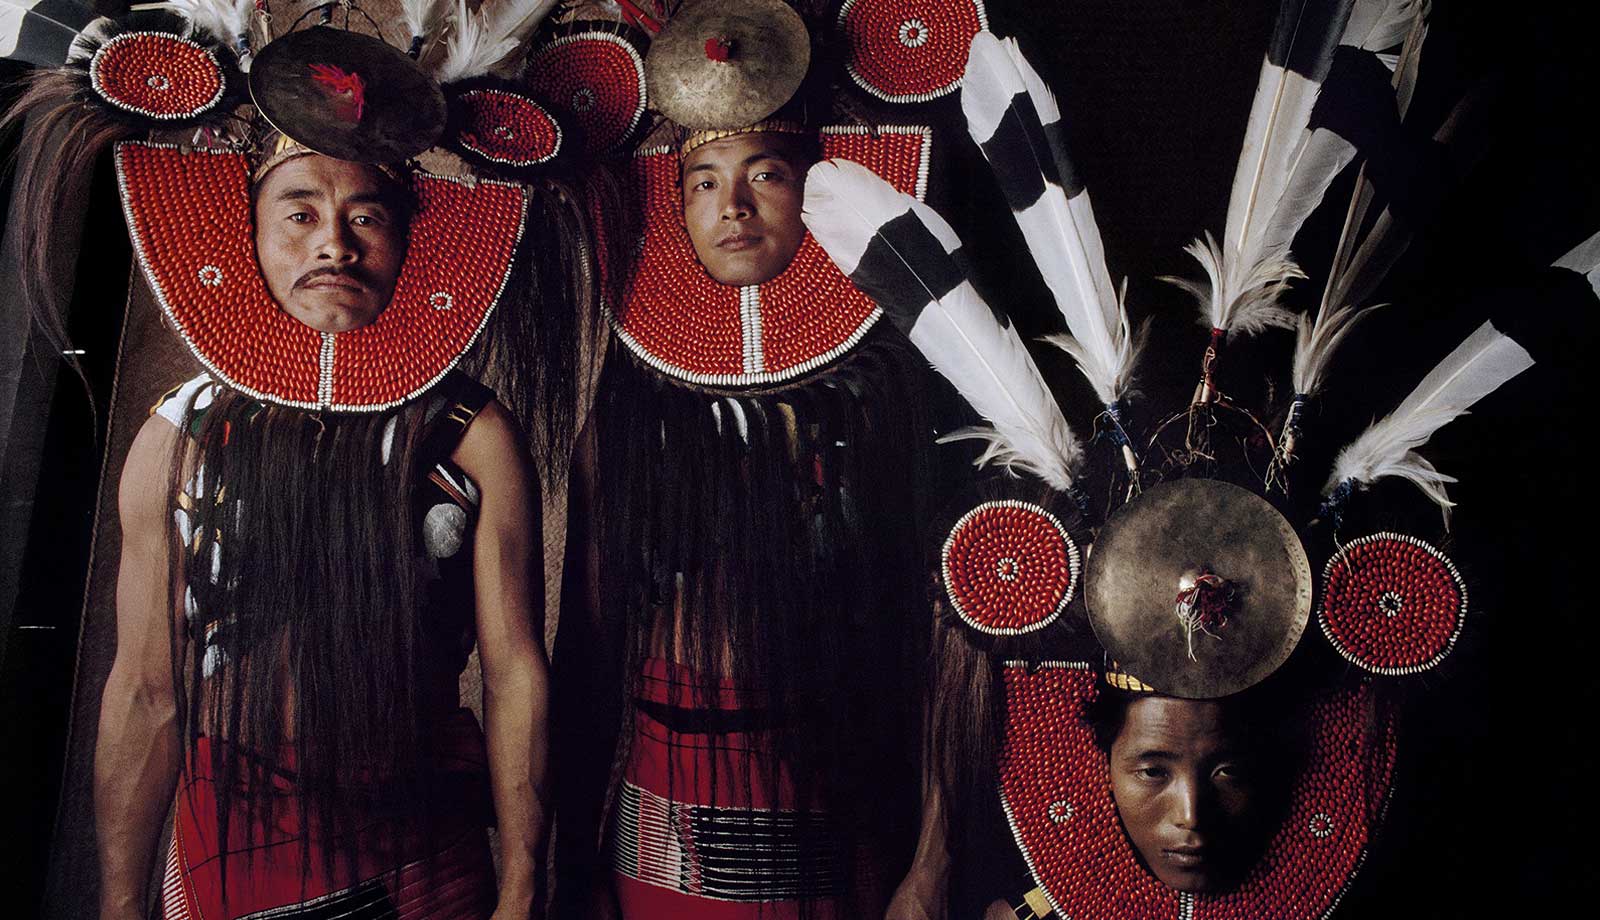 Naga People